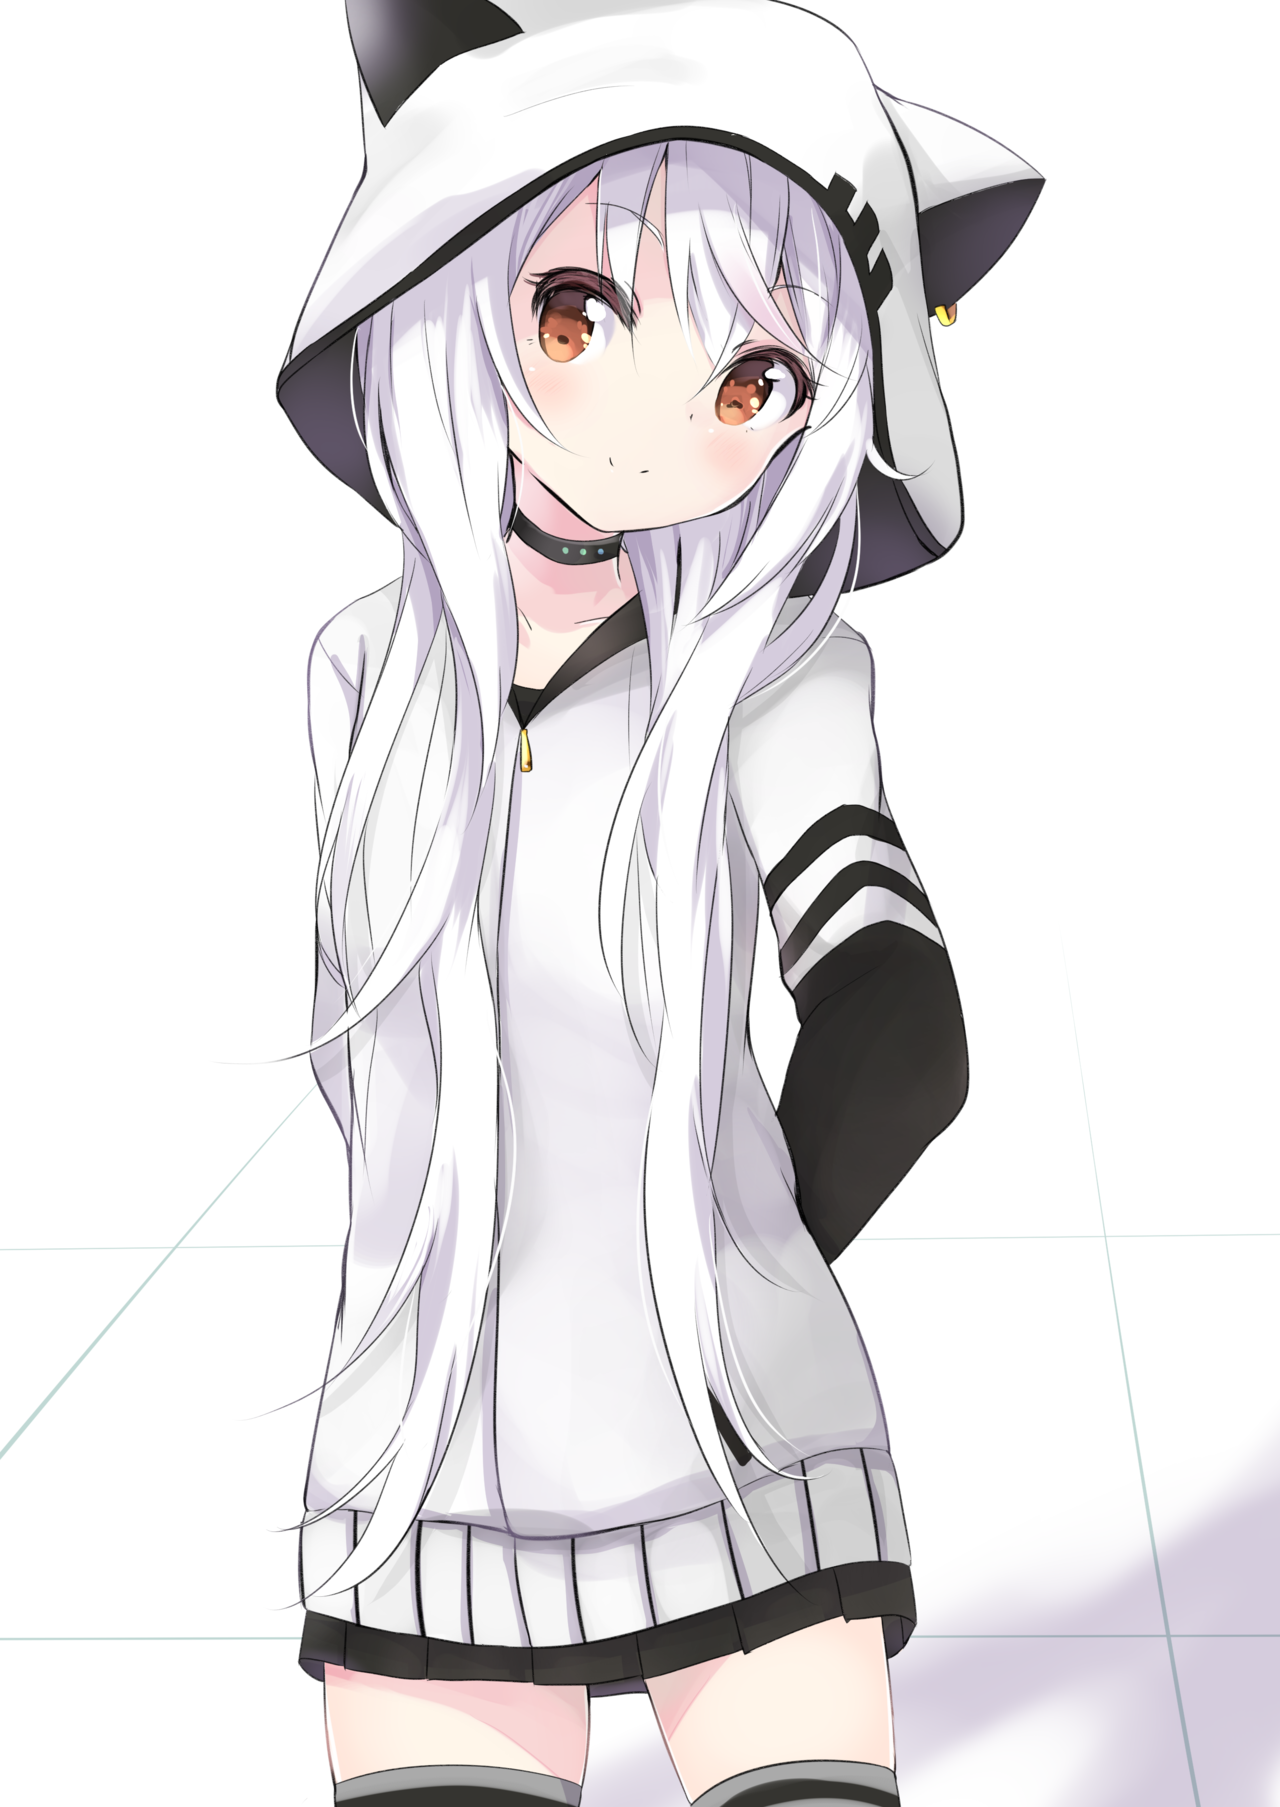 White-cute anime wolf girl by S5kye on DeviantArt